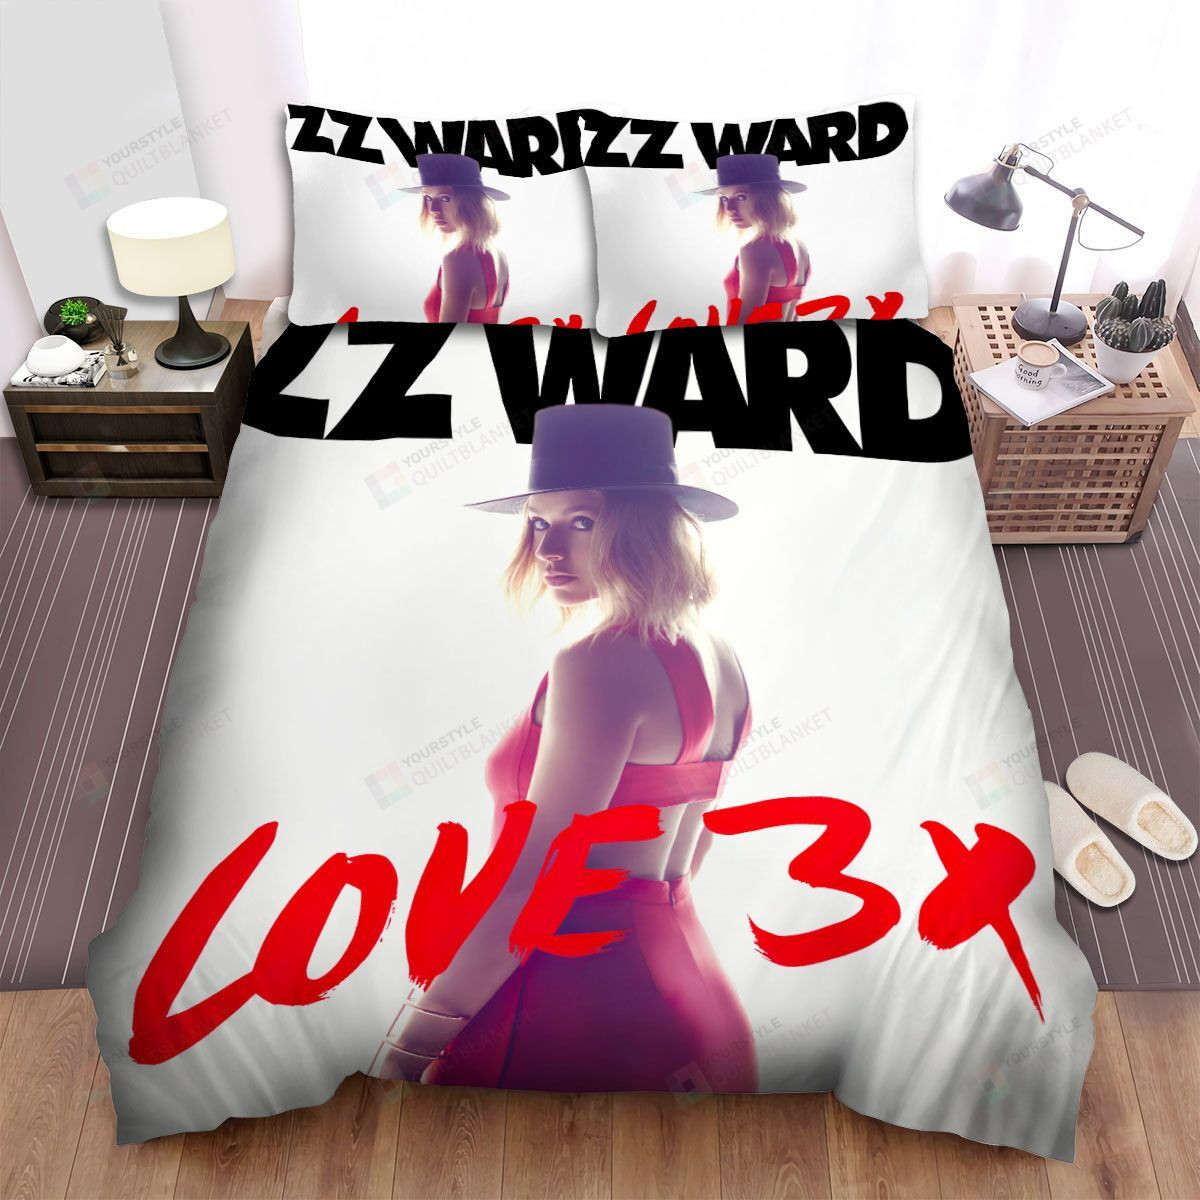 Zz Ward Music Love 3x Album Spread Comforter Bedding Sets